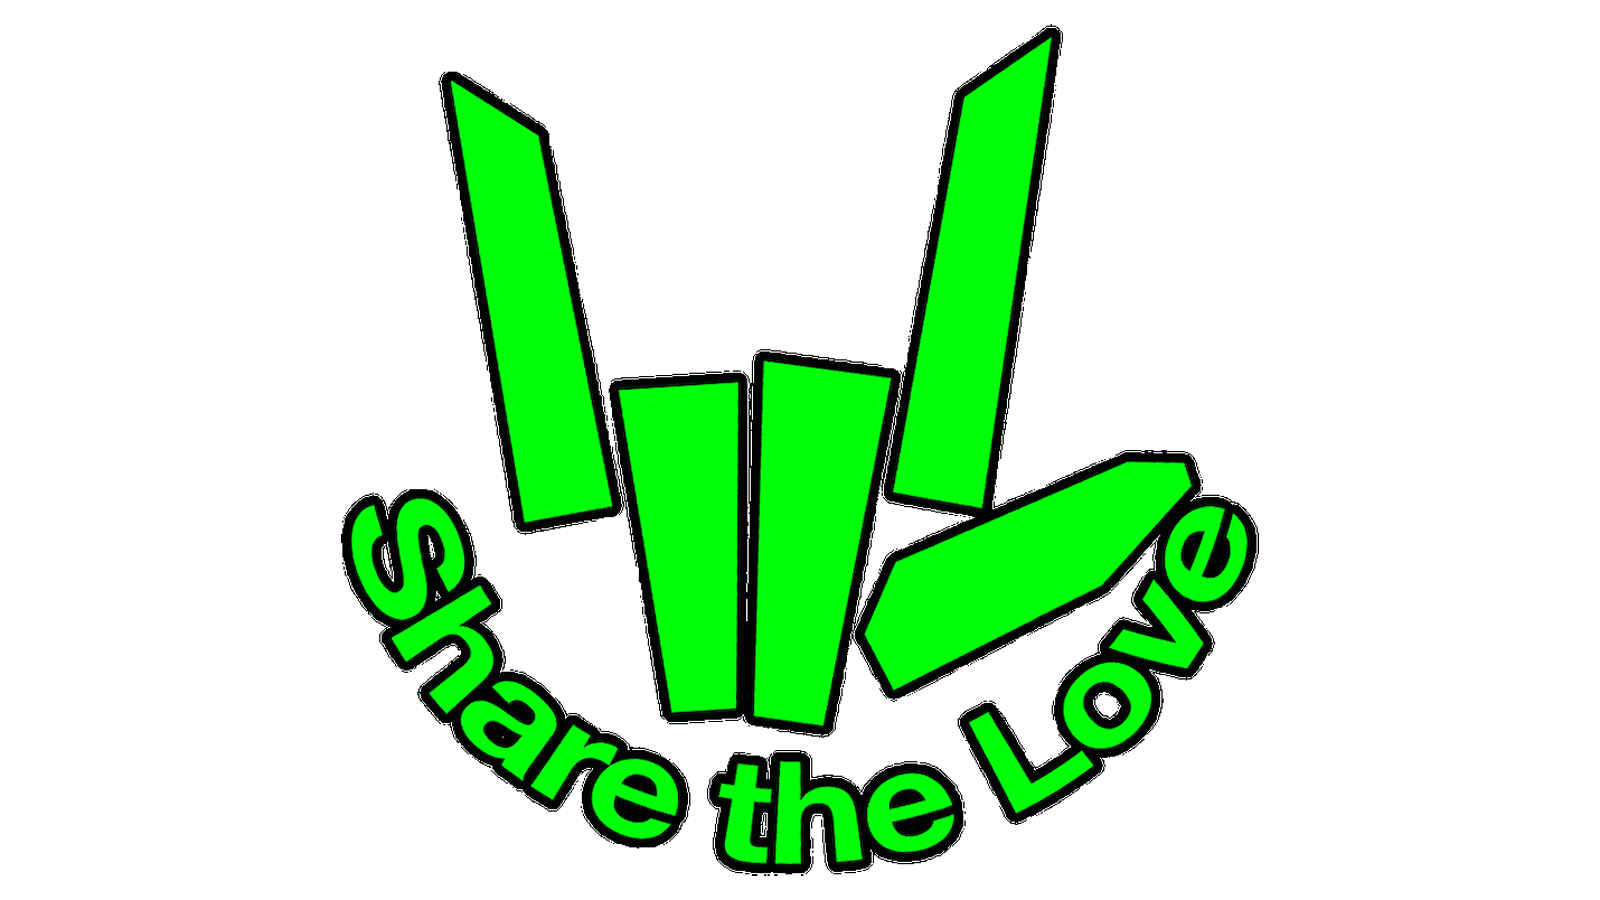 Love Story Logo by Garagephic Studio on Dribbble